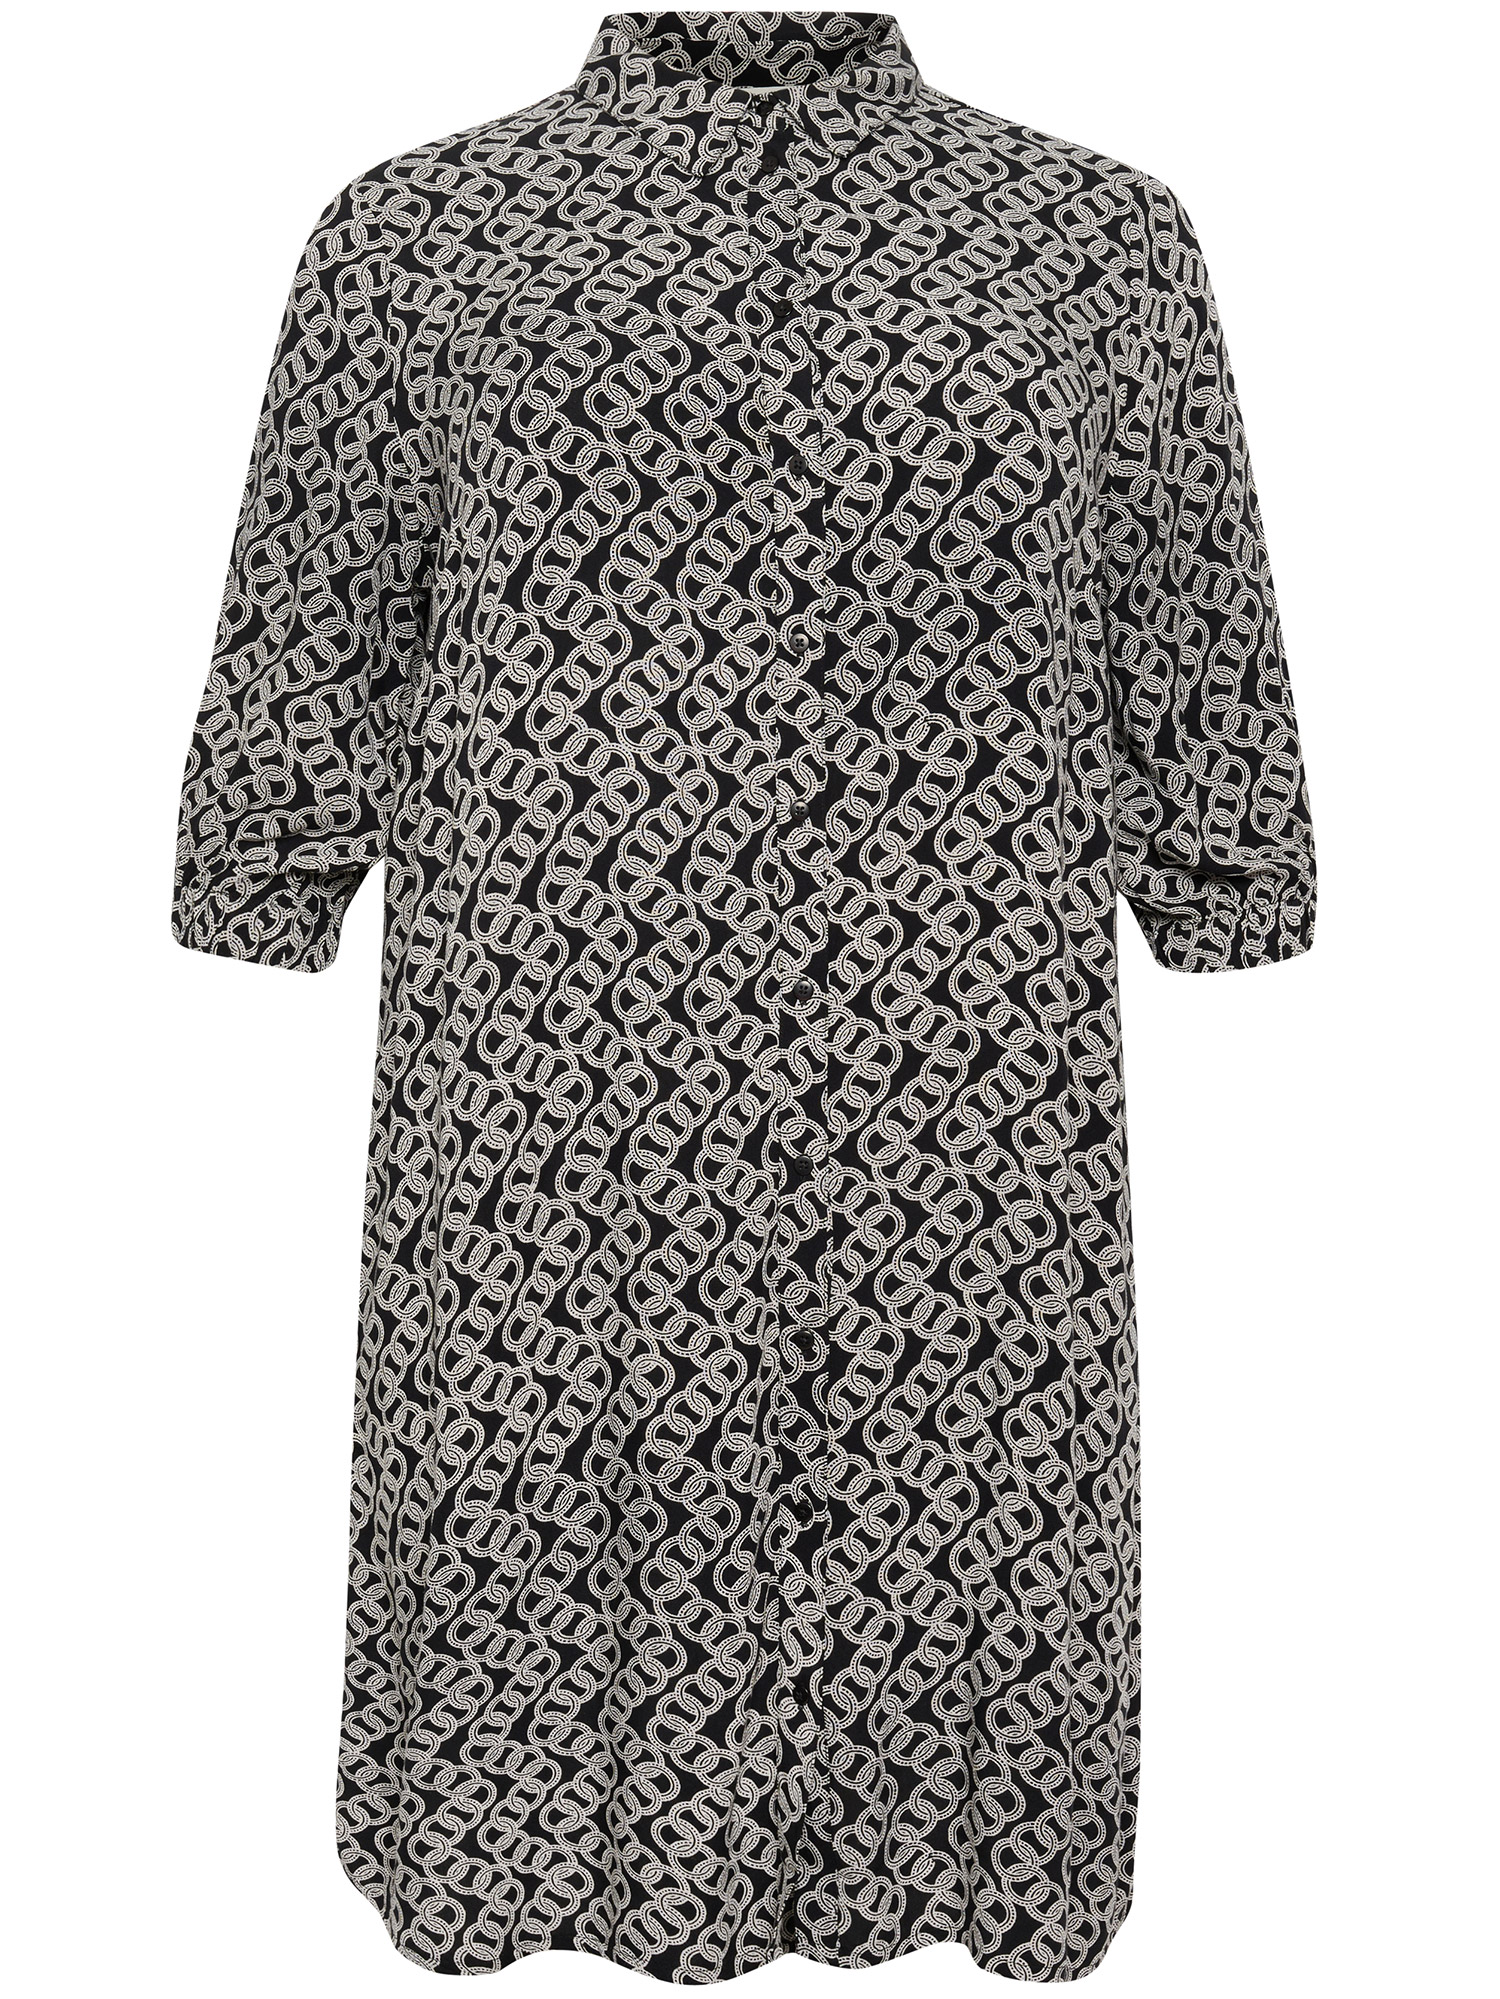 KC LIANA - Flot sort viskose skjorte kjole med beige mønster fra Kaffe Curve